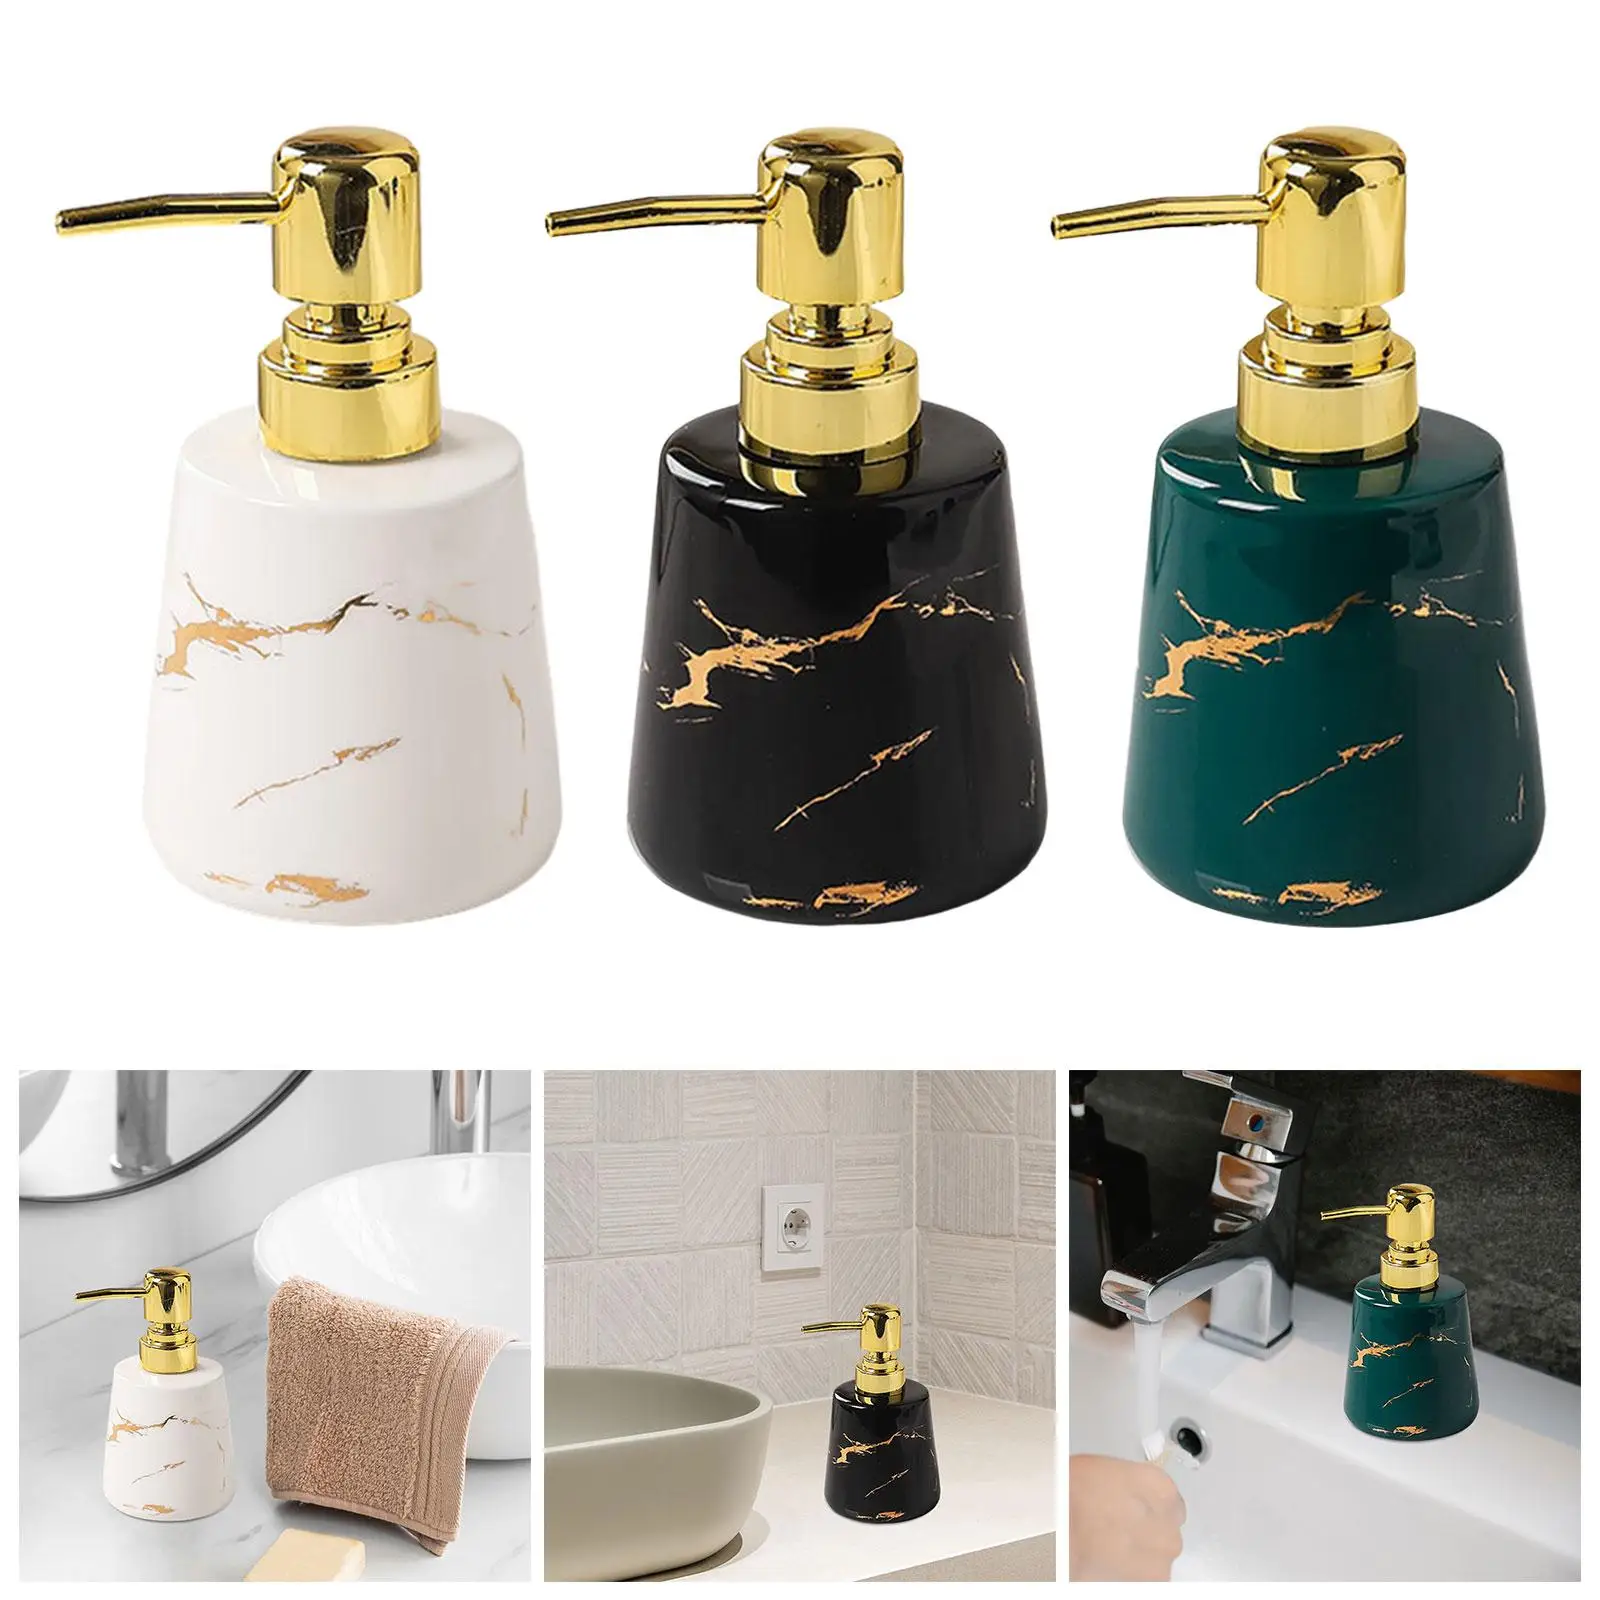 Pump Soap Dispenser Liquid Hand Soap Dispenser Stylish Elegant Sturdy Ceramic Bathroom Liquid Container Refillable for Hotel